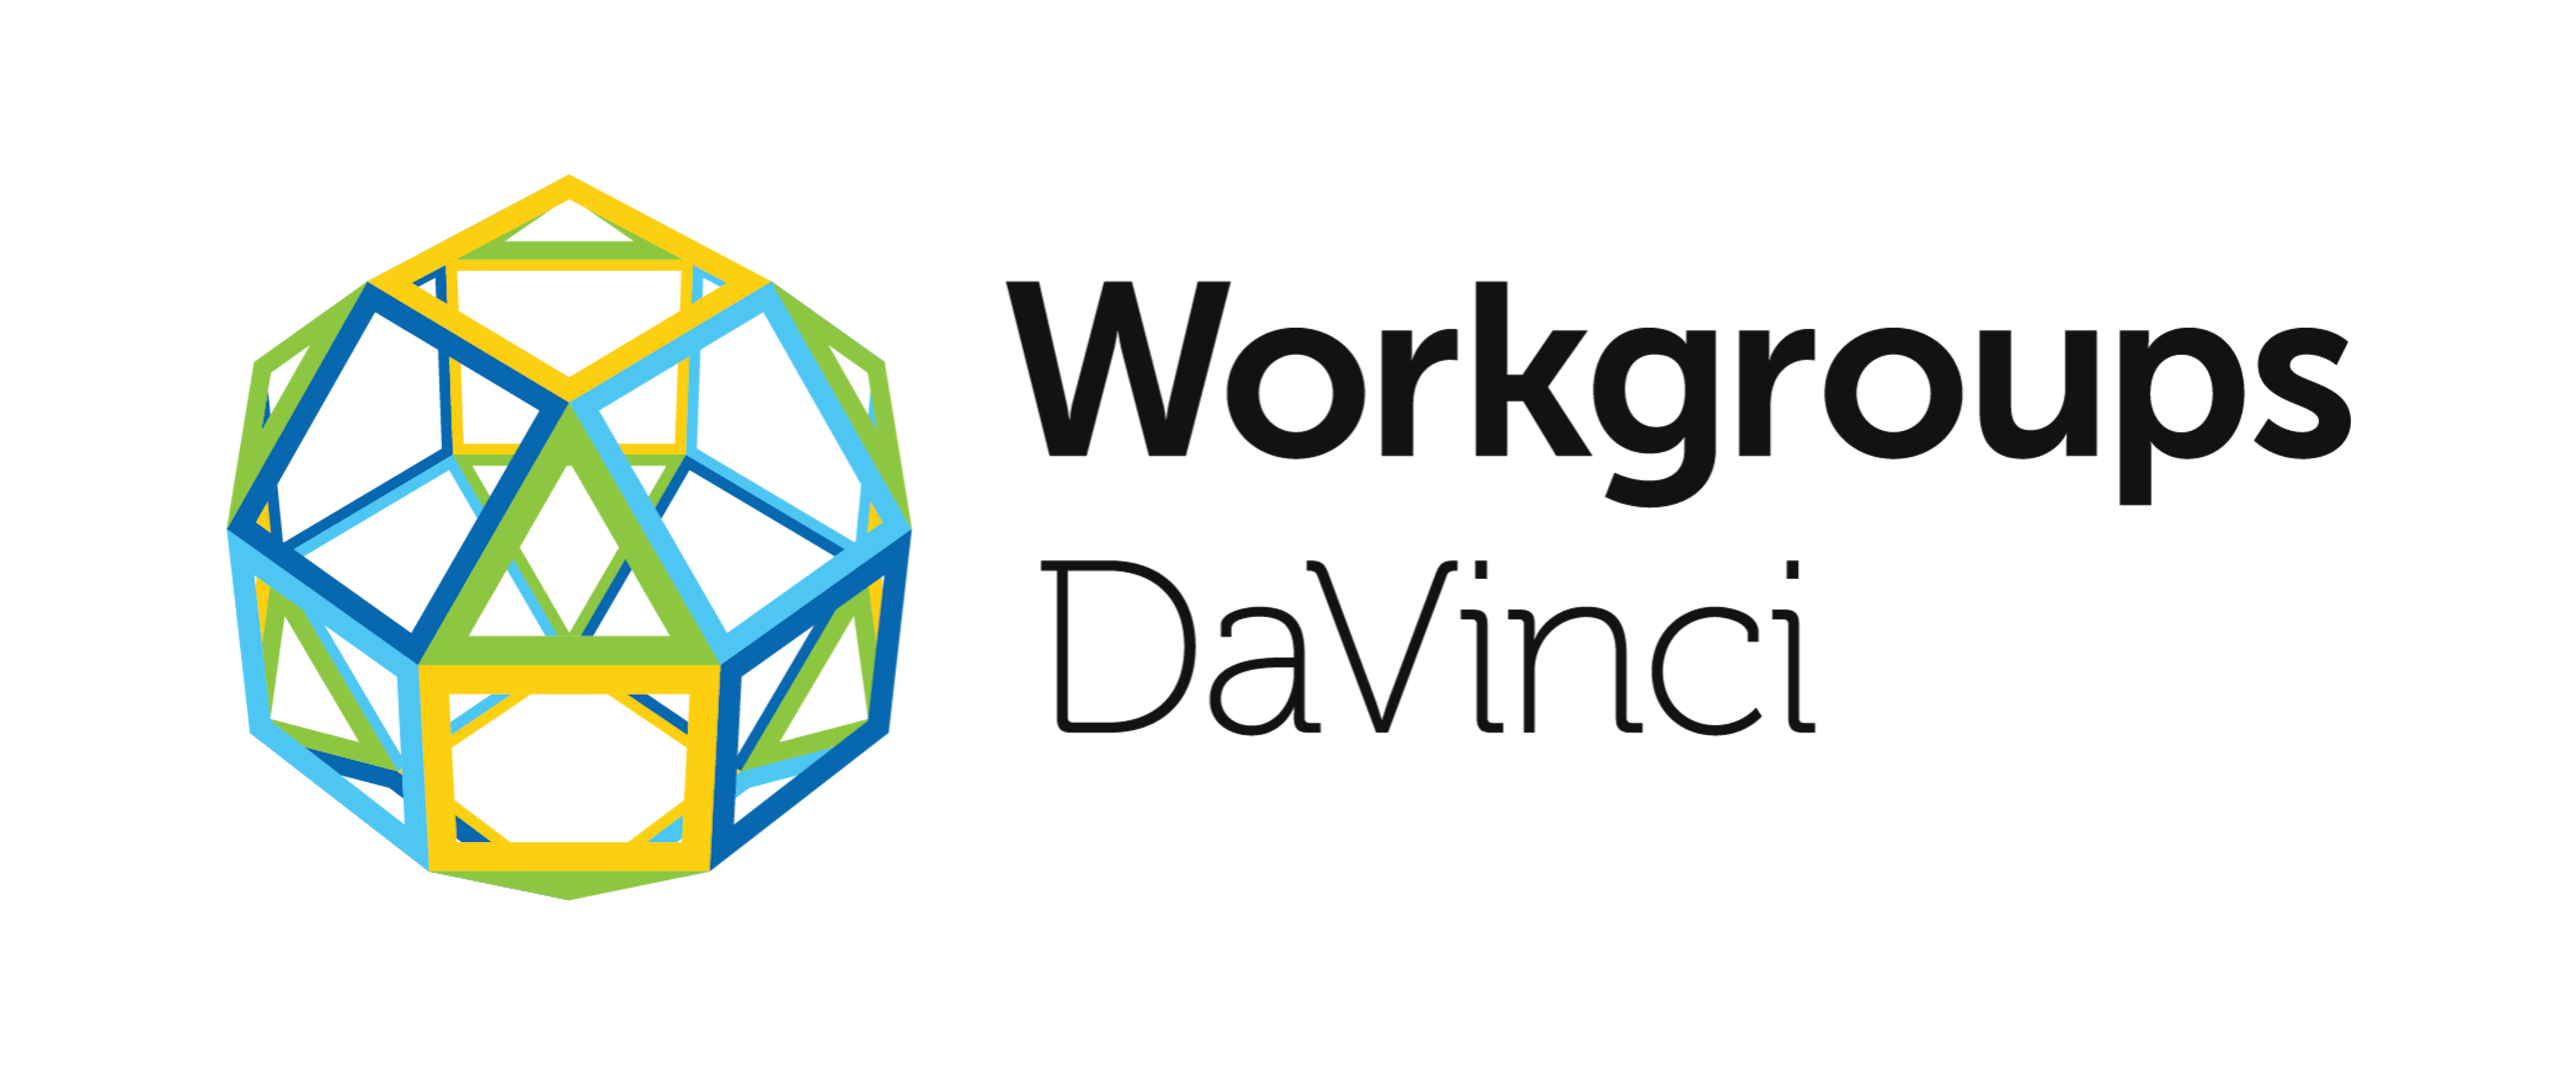 Workgroups DaVinci Logo